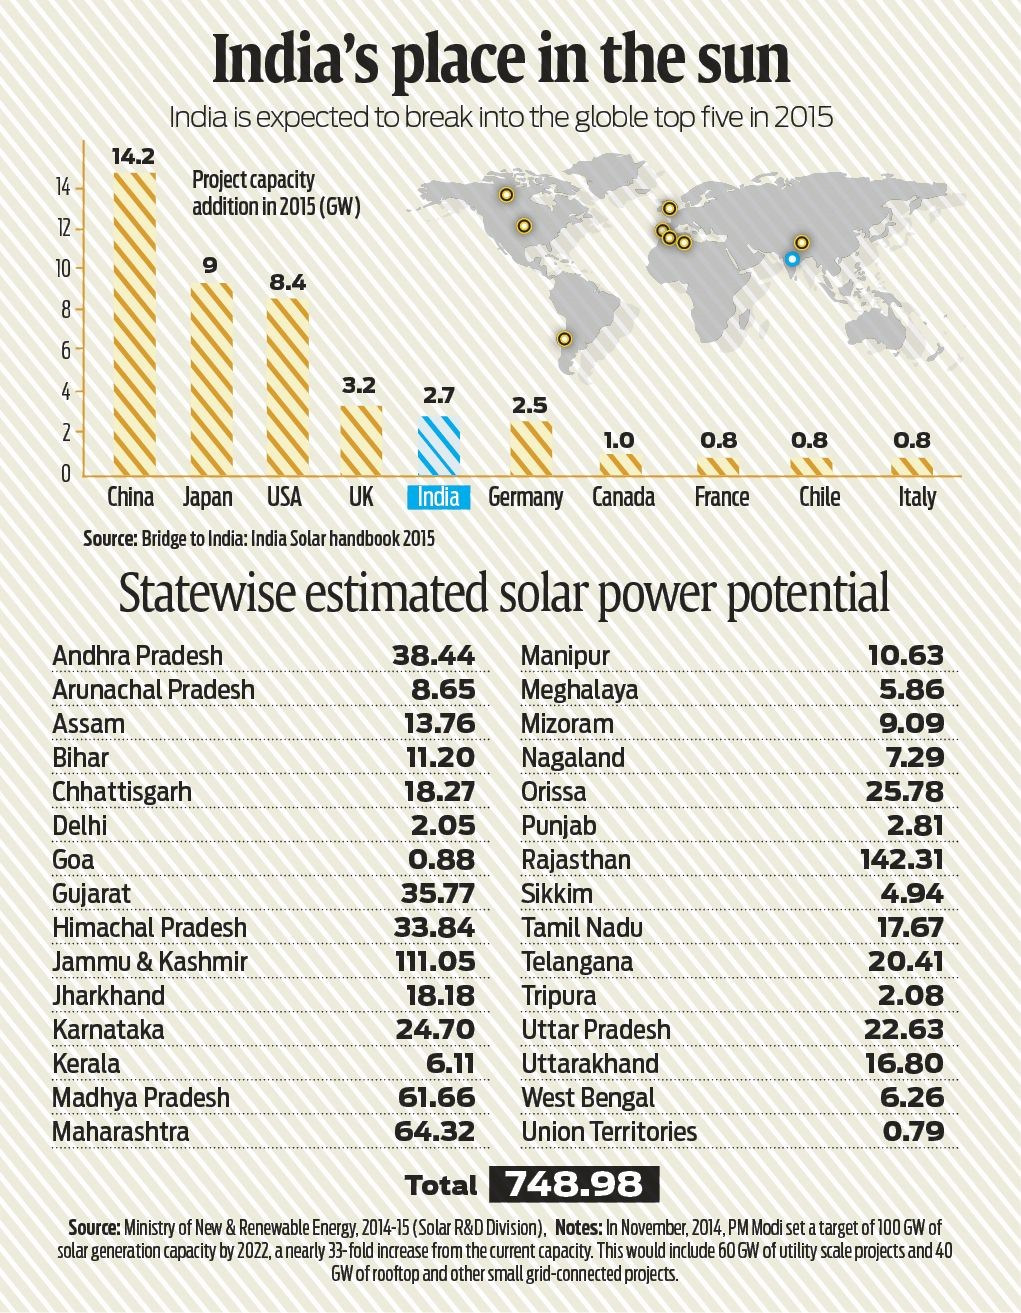 India's solar power